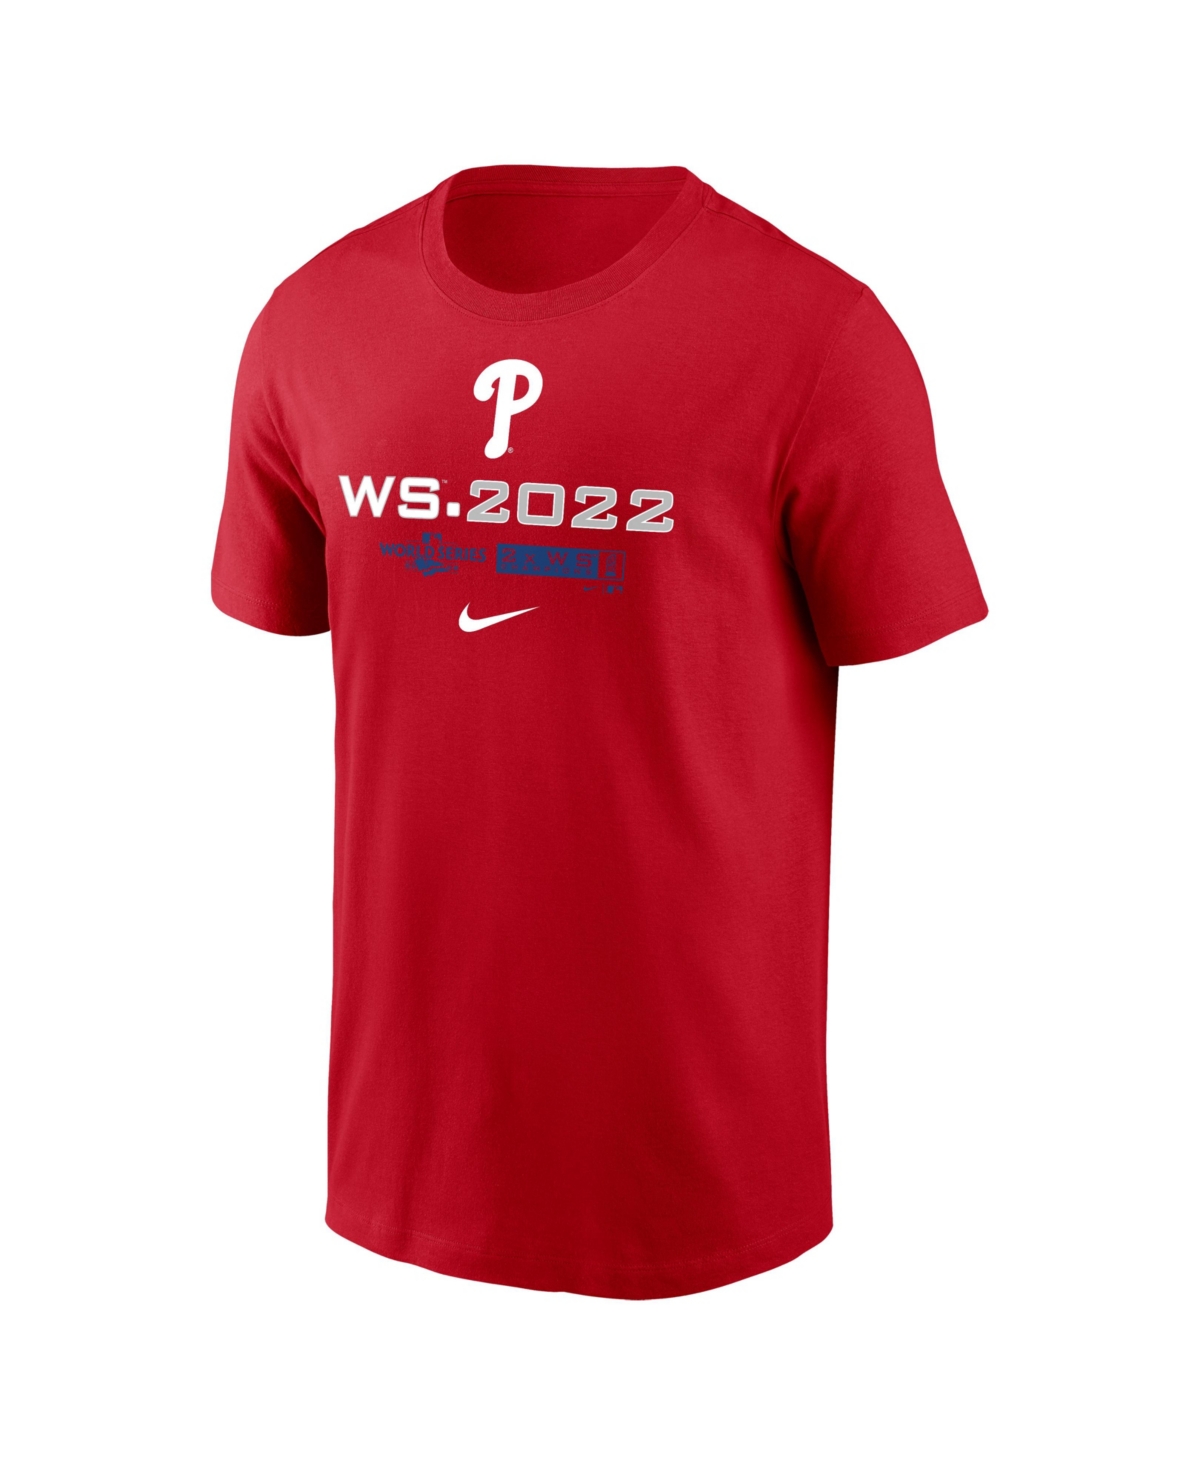 Men's Nike Red Philadelphia Phillies 2022 World Series Participant Short Sleeve T-shirt